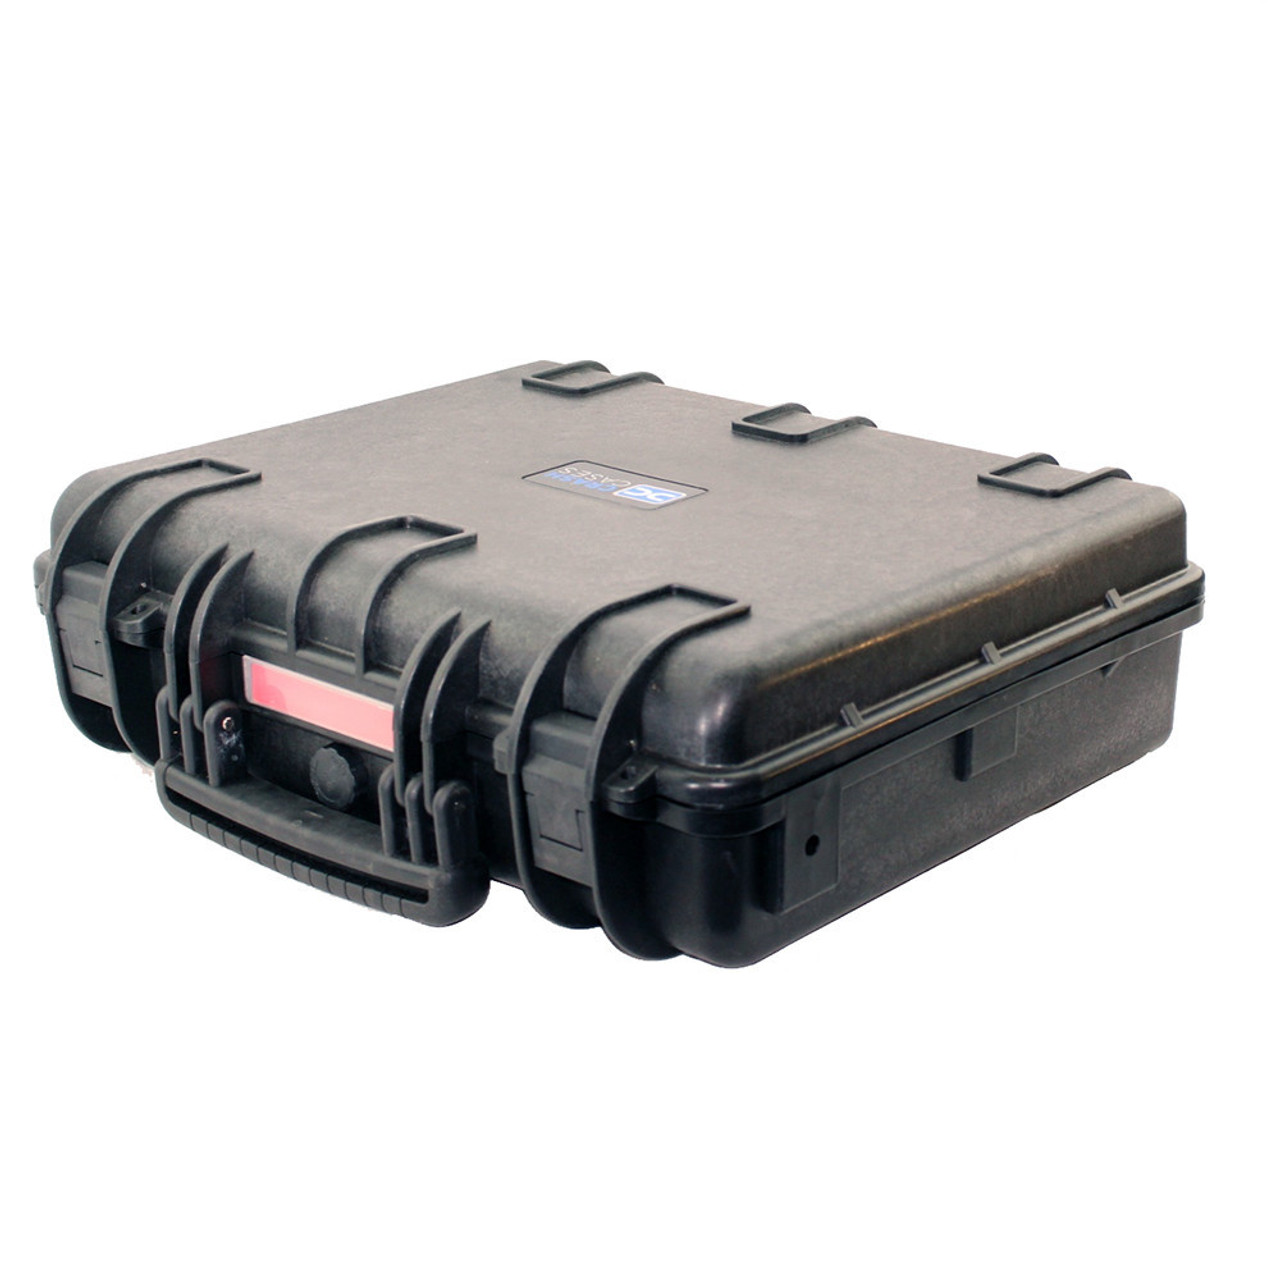 Wilderness Technology Tsunami Dry Box Laptop Case